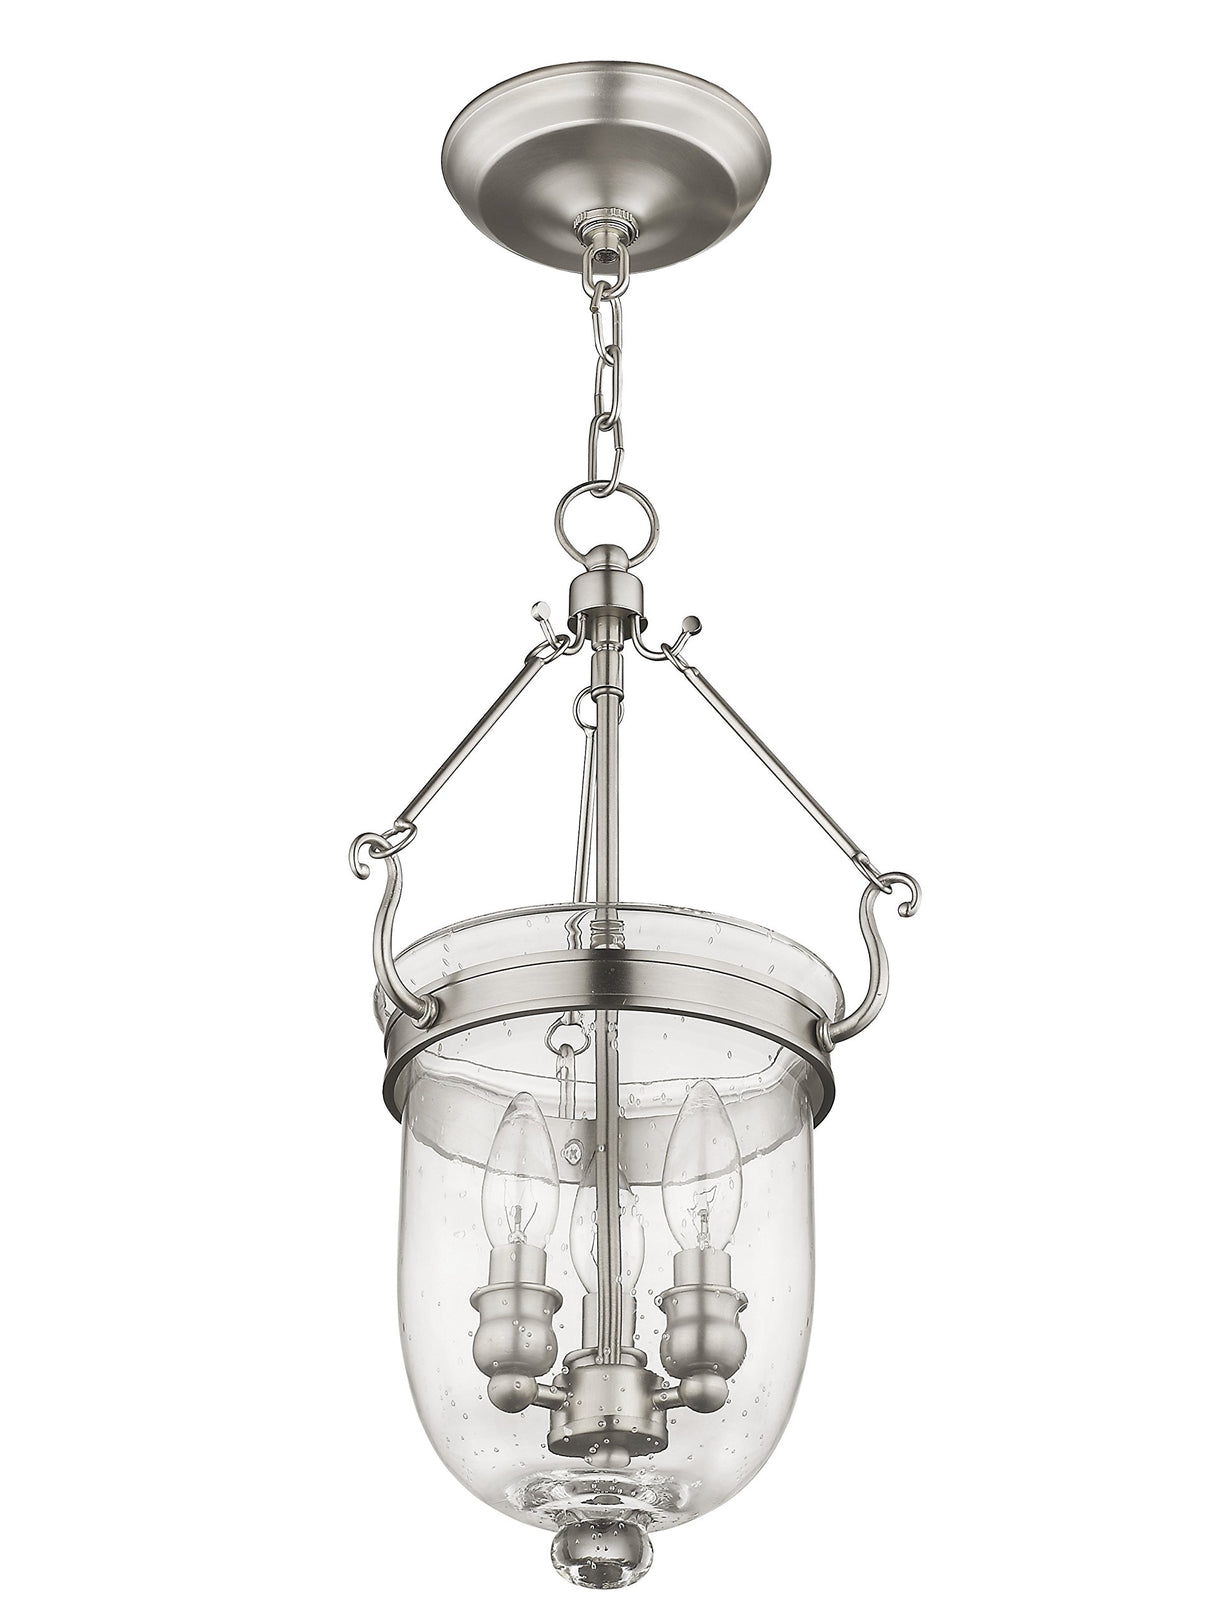 Livex Lighting 5083-91 Jefferson 3 Light Brushed Nickel Bell Jar Hanging Lantern with Seeded Glass